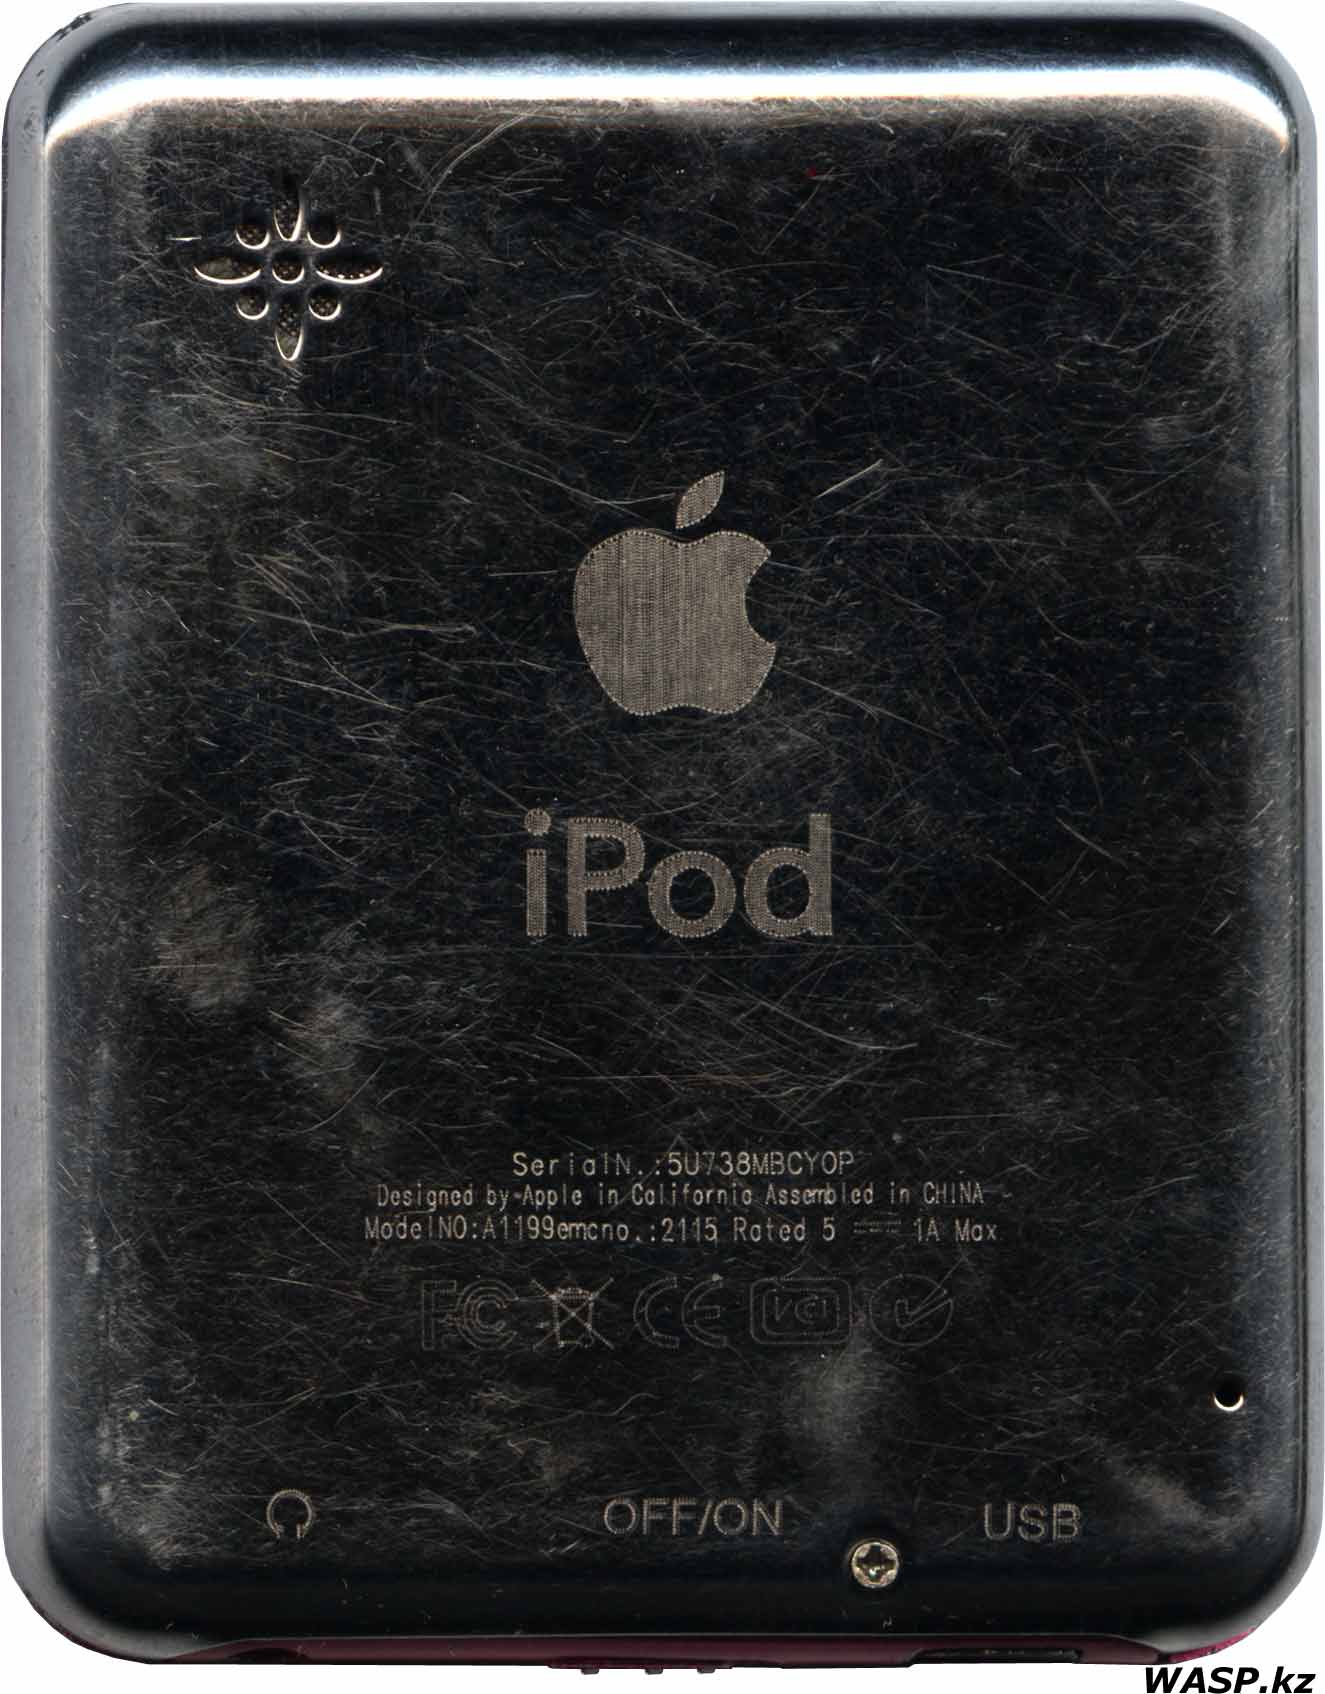 A1199 iPod Nano 3G китайская подделка, обзор